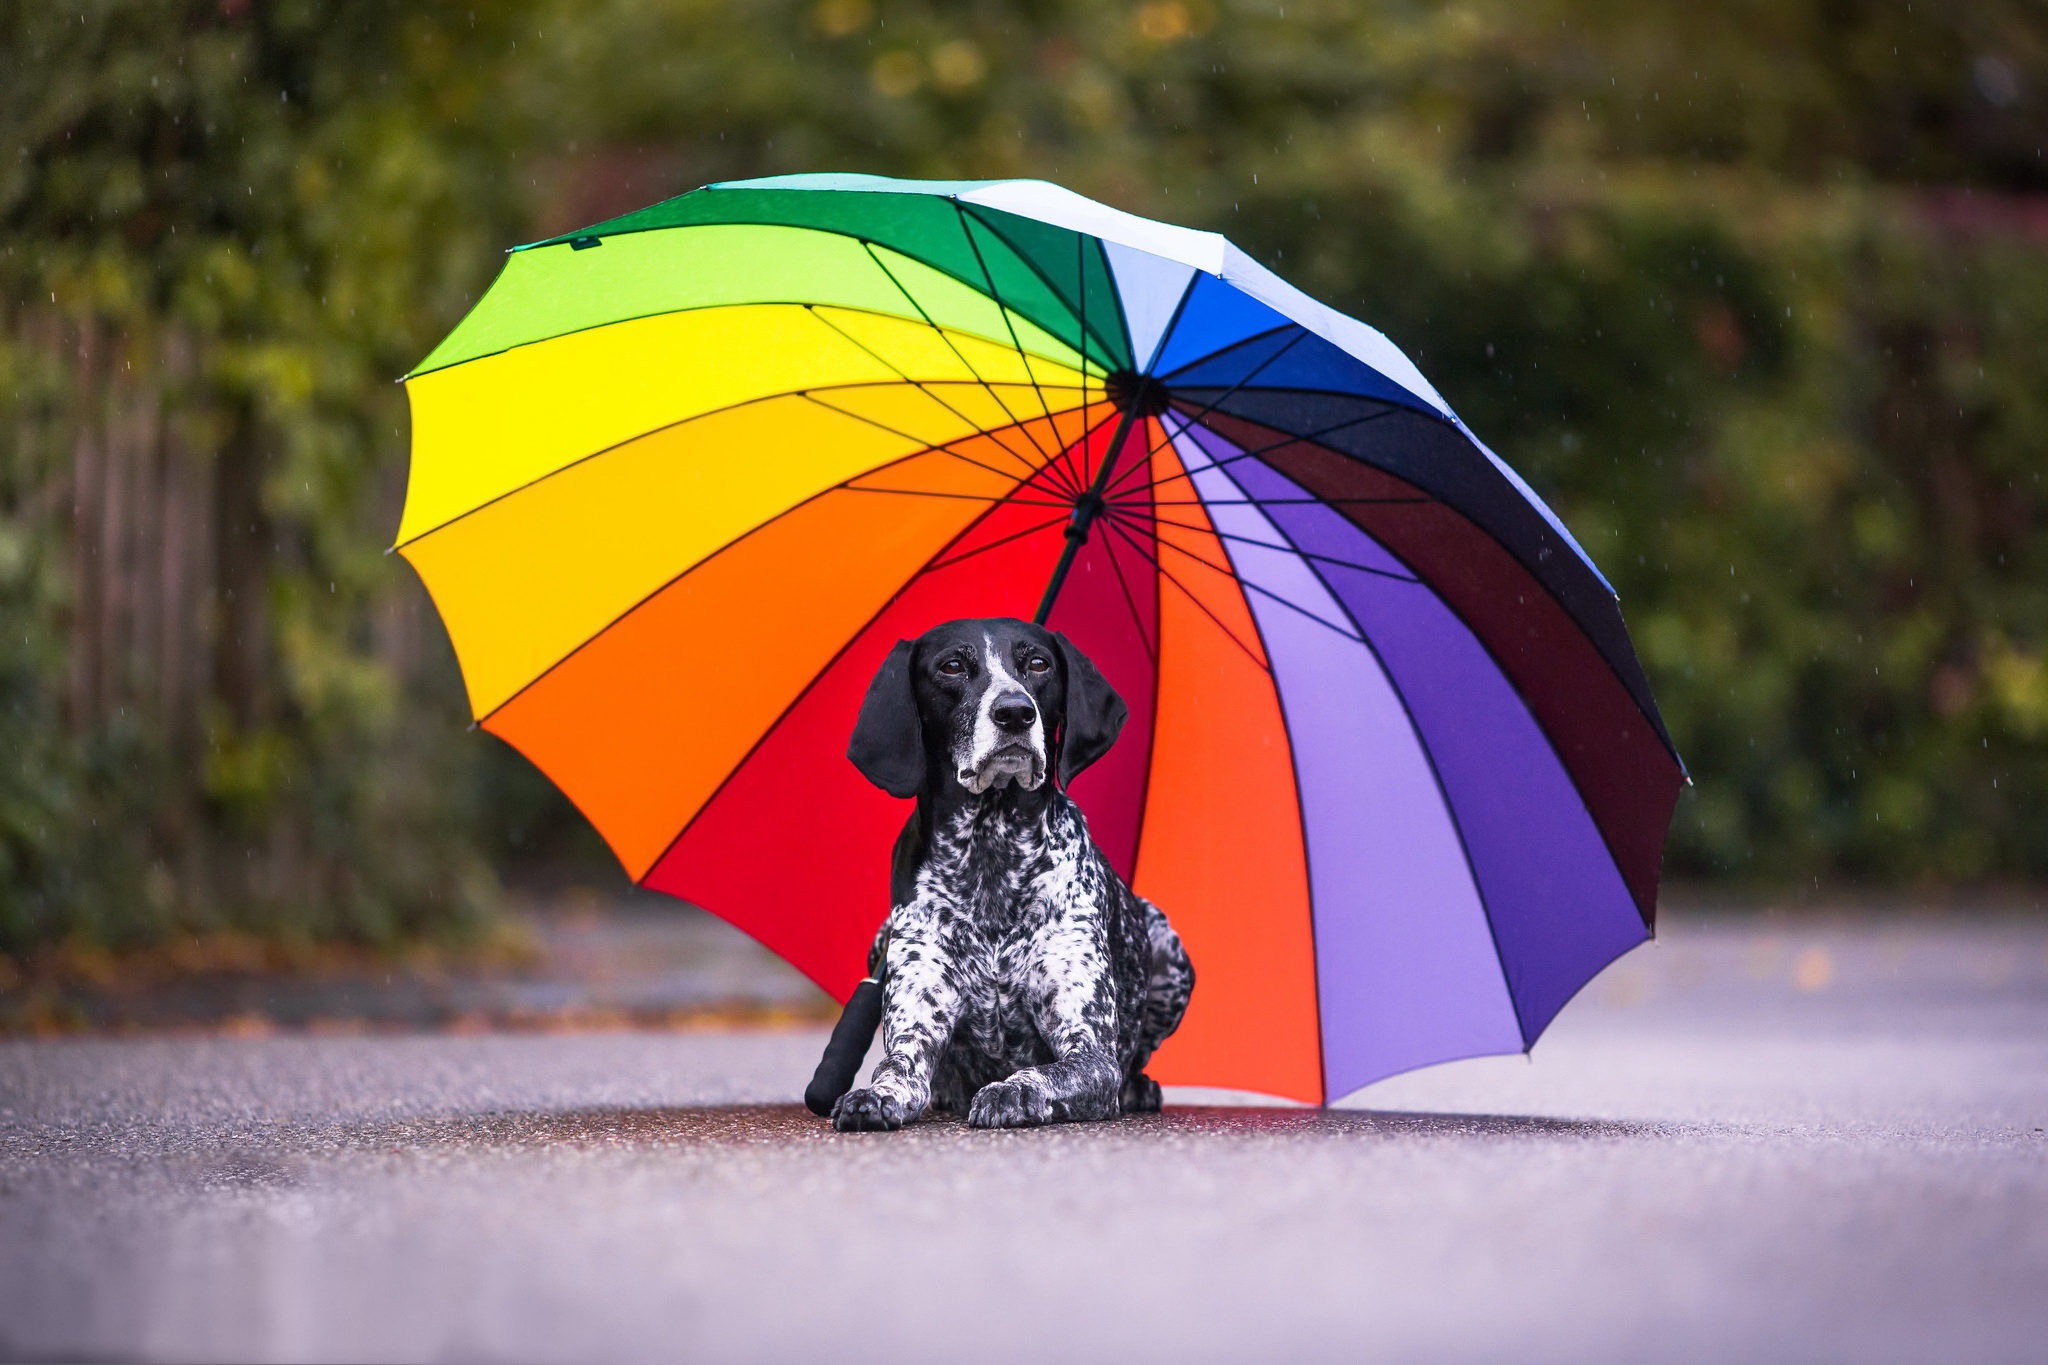 Обои зонтика. Собака под зонтом. Зонтики яркие. Зонтик для собак. Зонтик с собачками.